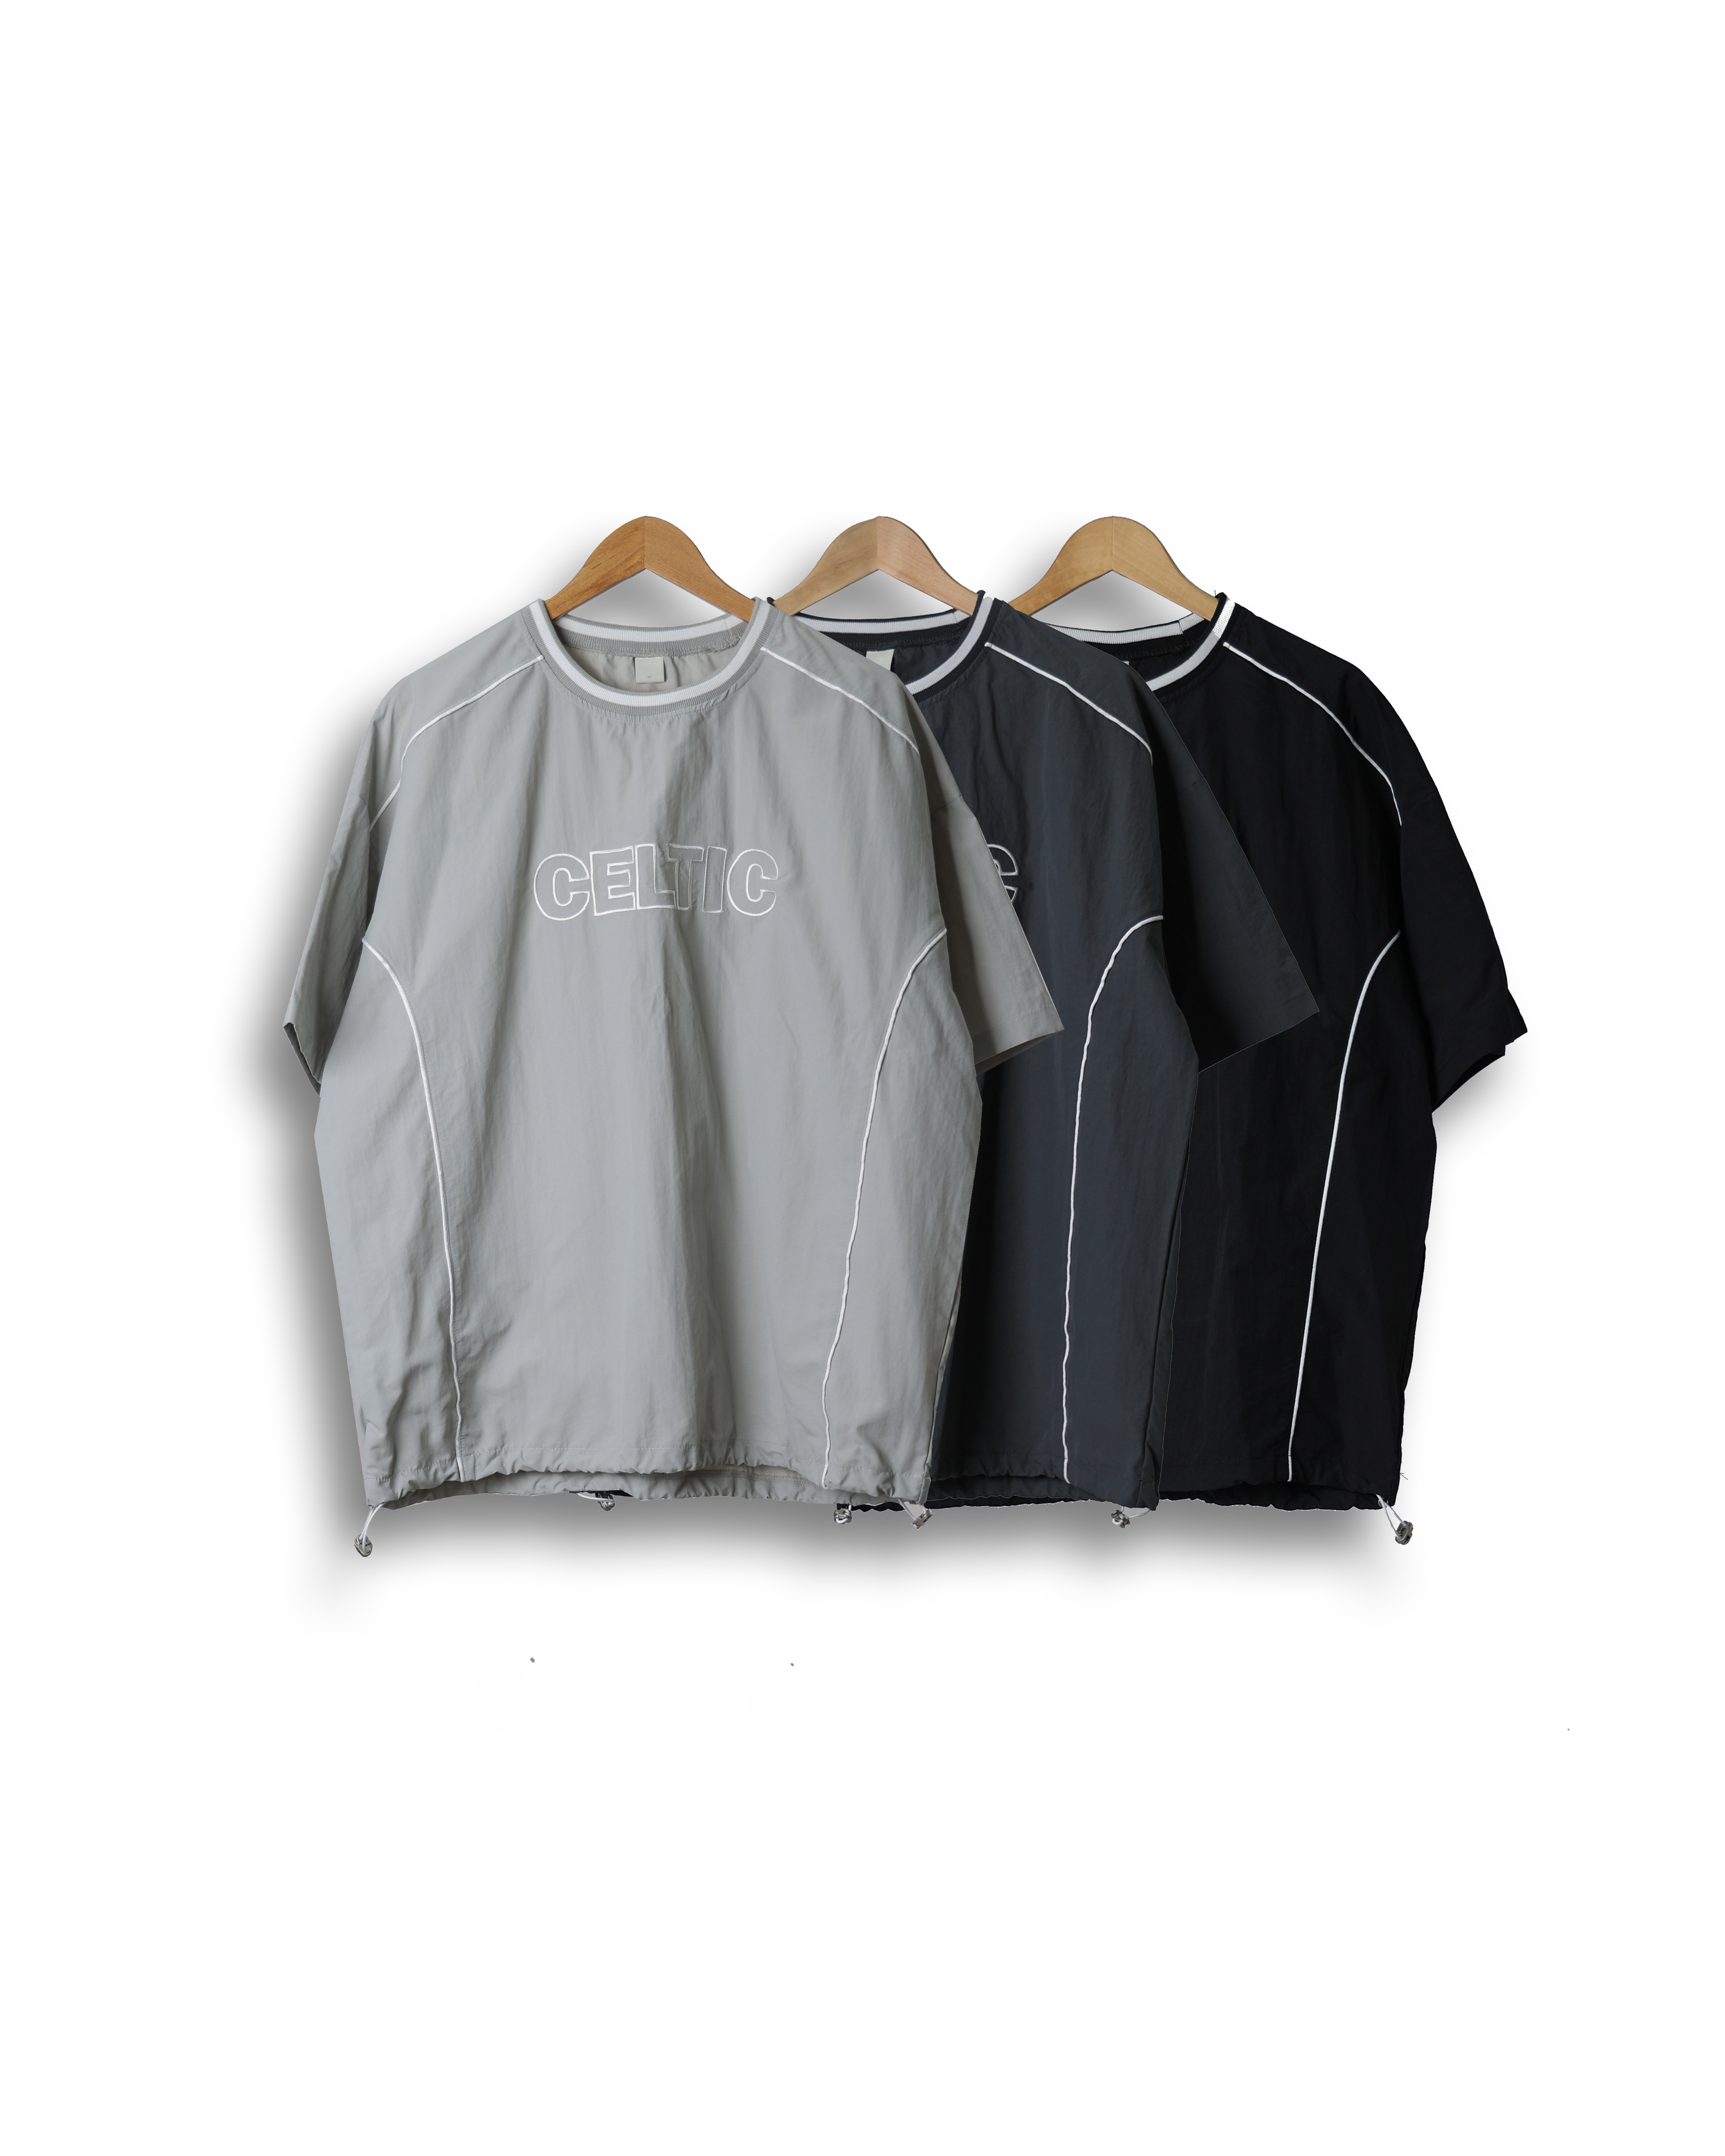 RAM CELTIC Athletic Lining Nylon T Shirts (Black/Charcoal/Light Gray)